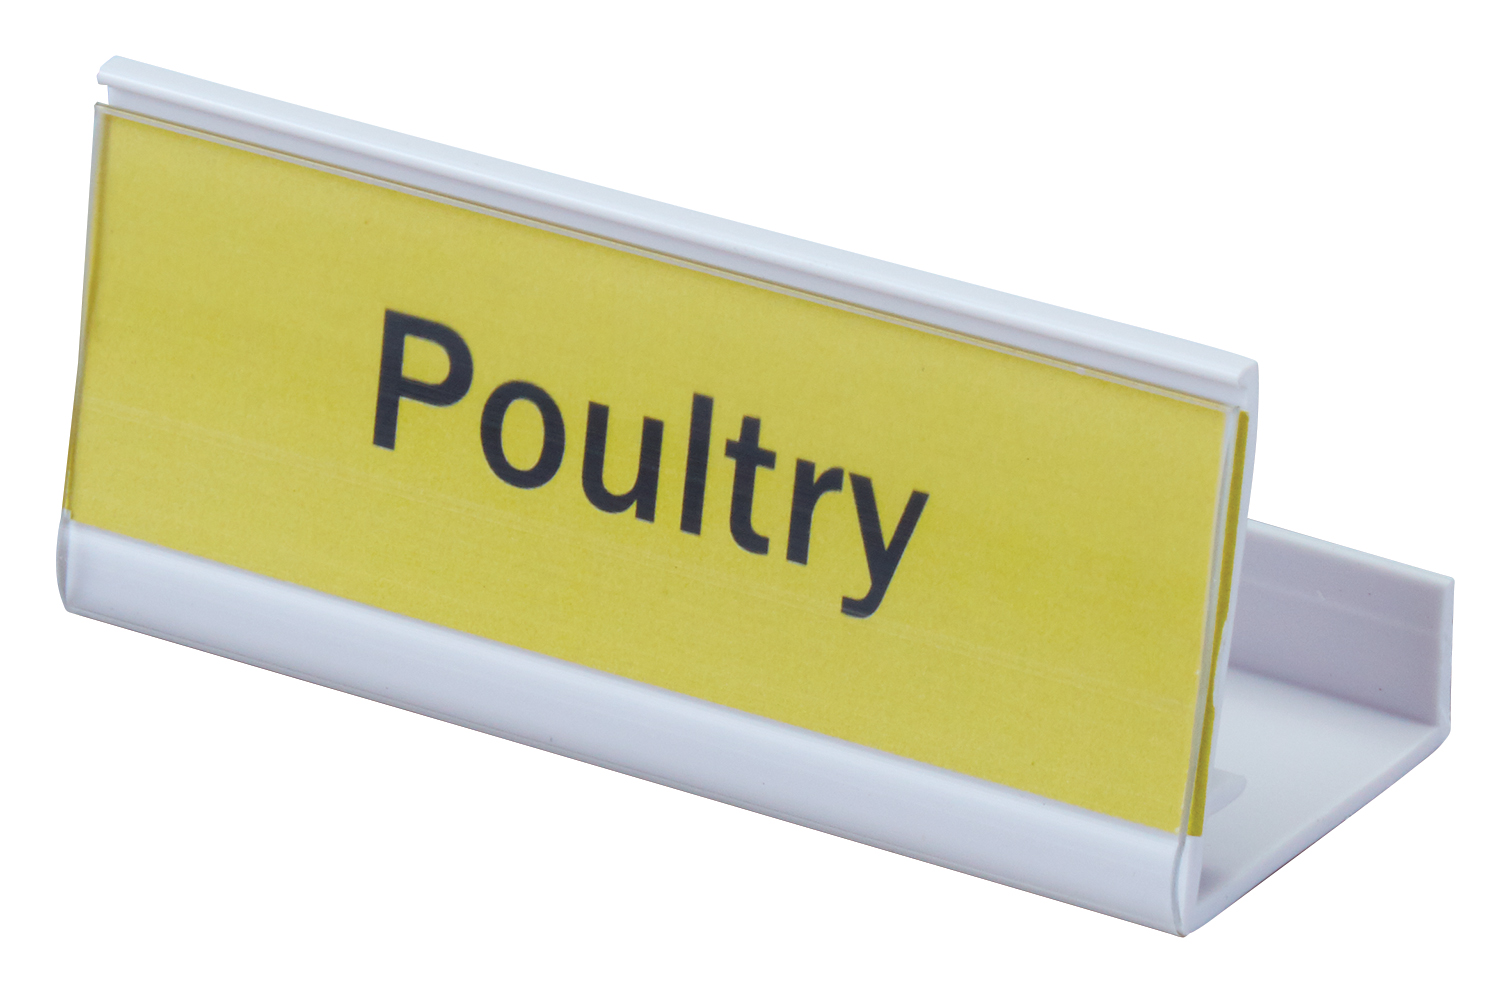 Shelf identification label saying Poultry